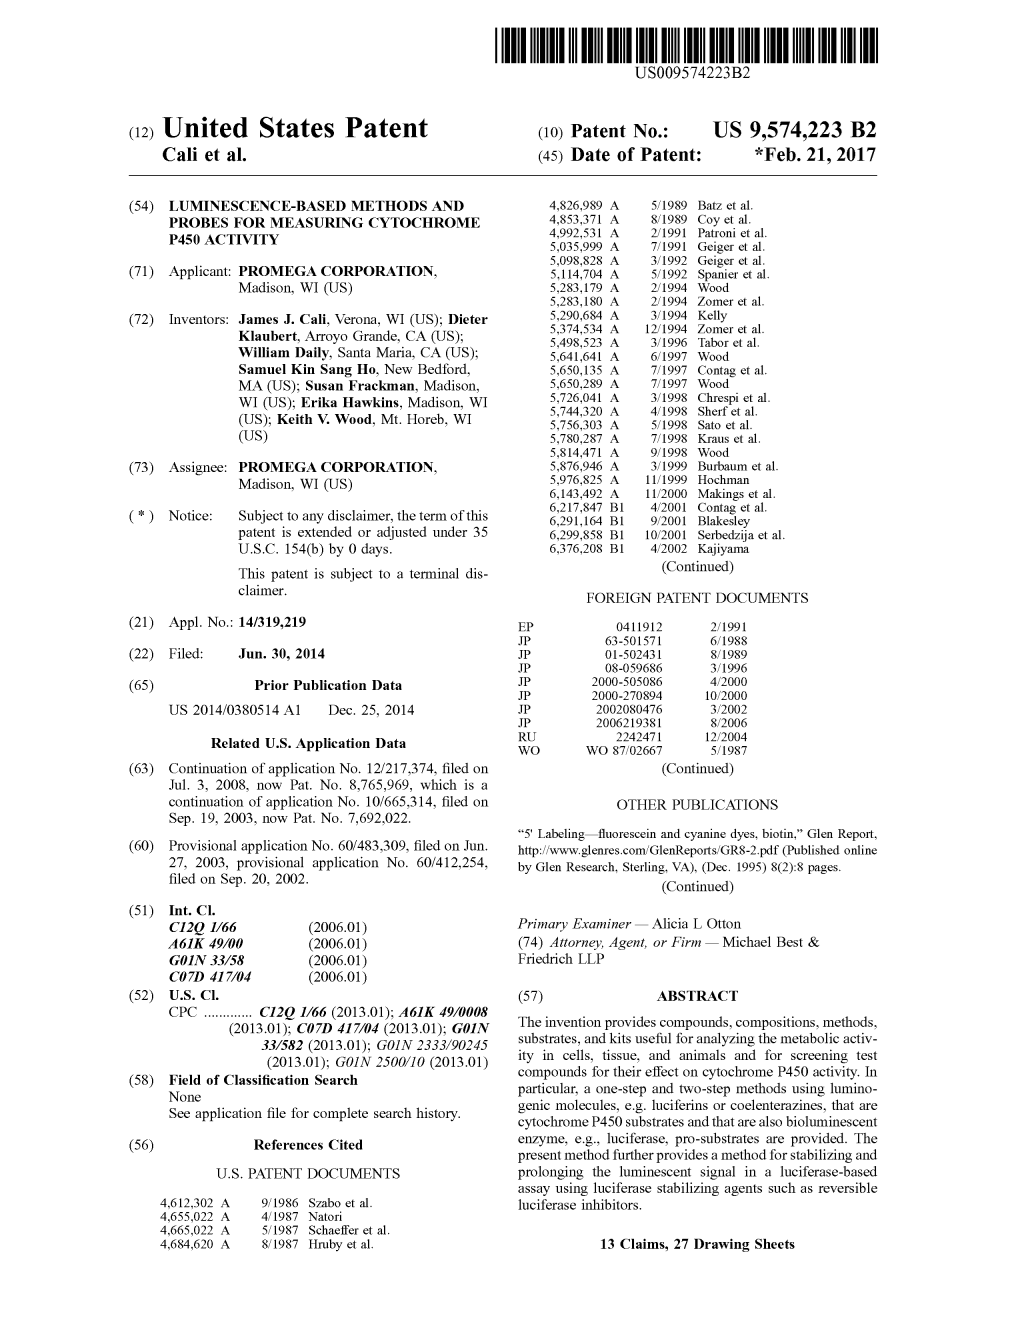 (12) United States Patent (10) Patent No.: US 9,574.223 B2 Cali Et Al